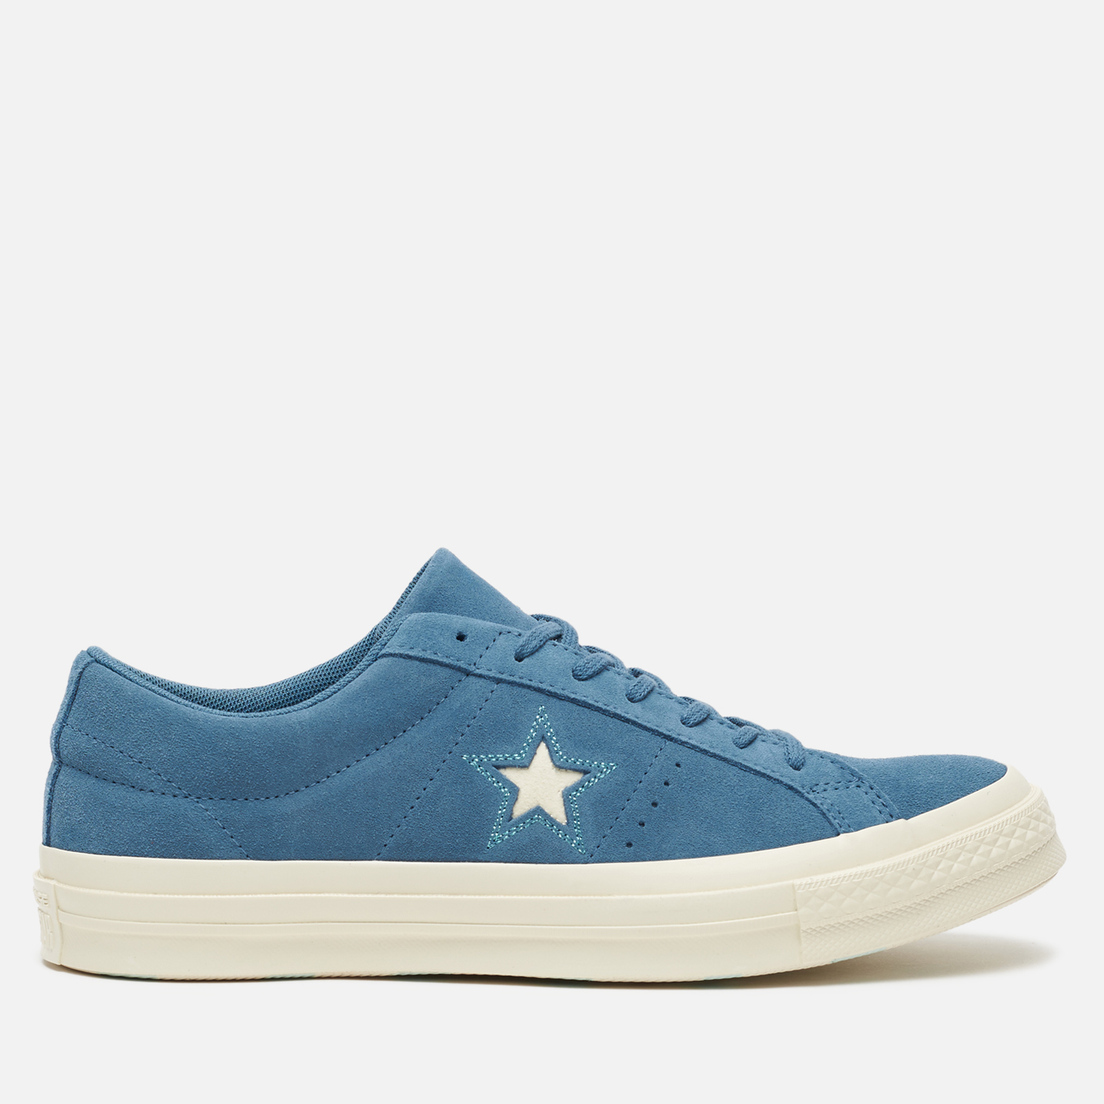 converse one star blue